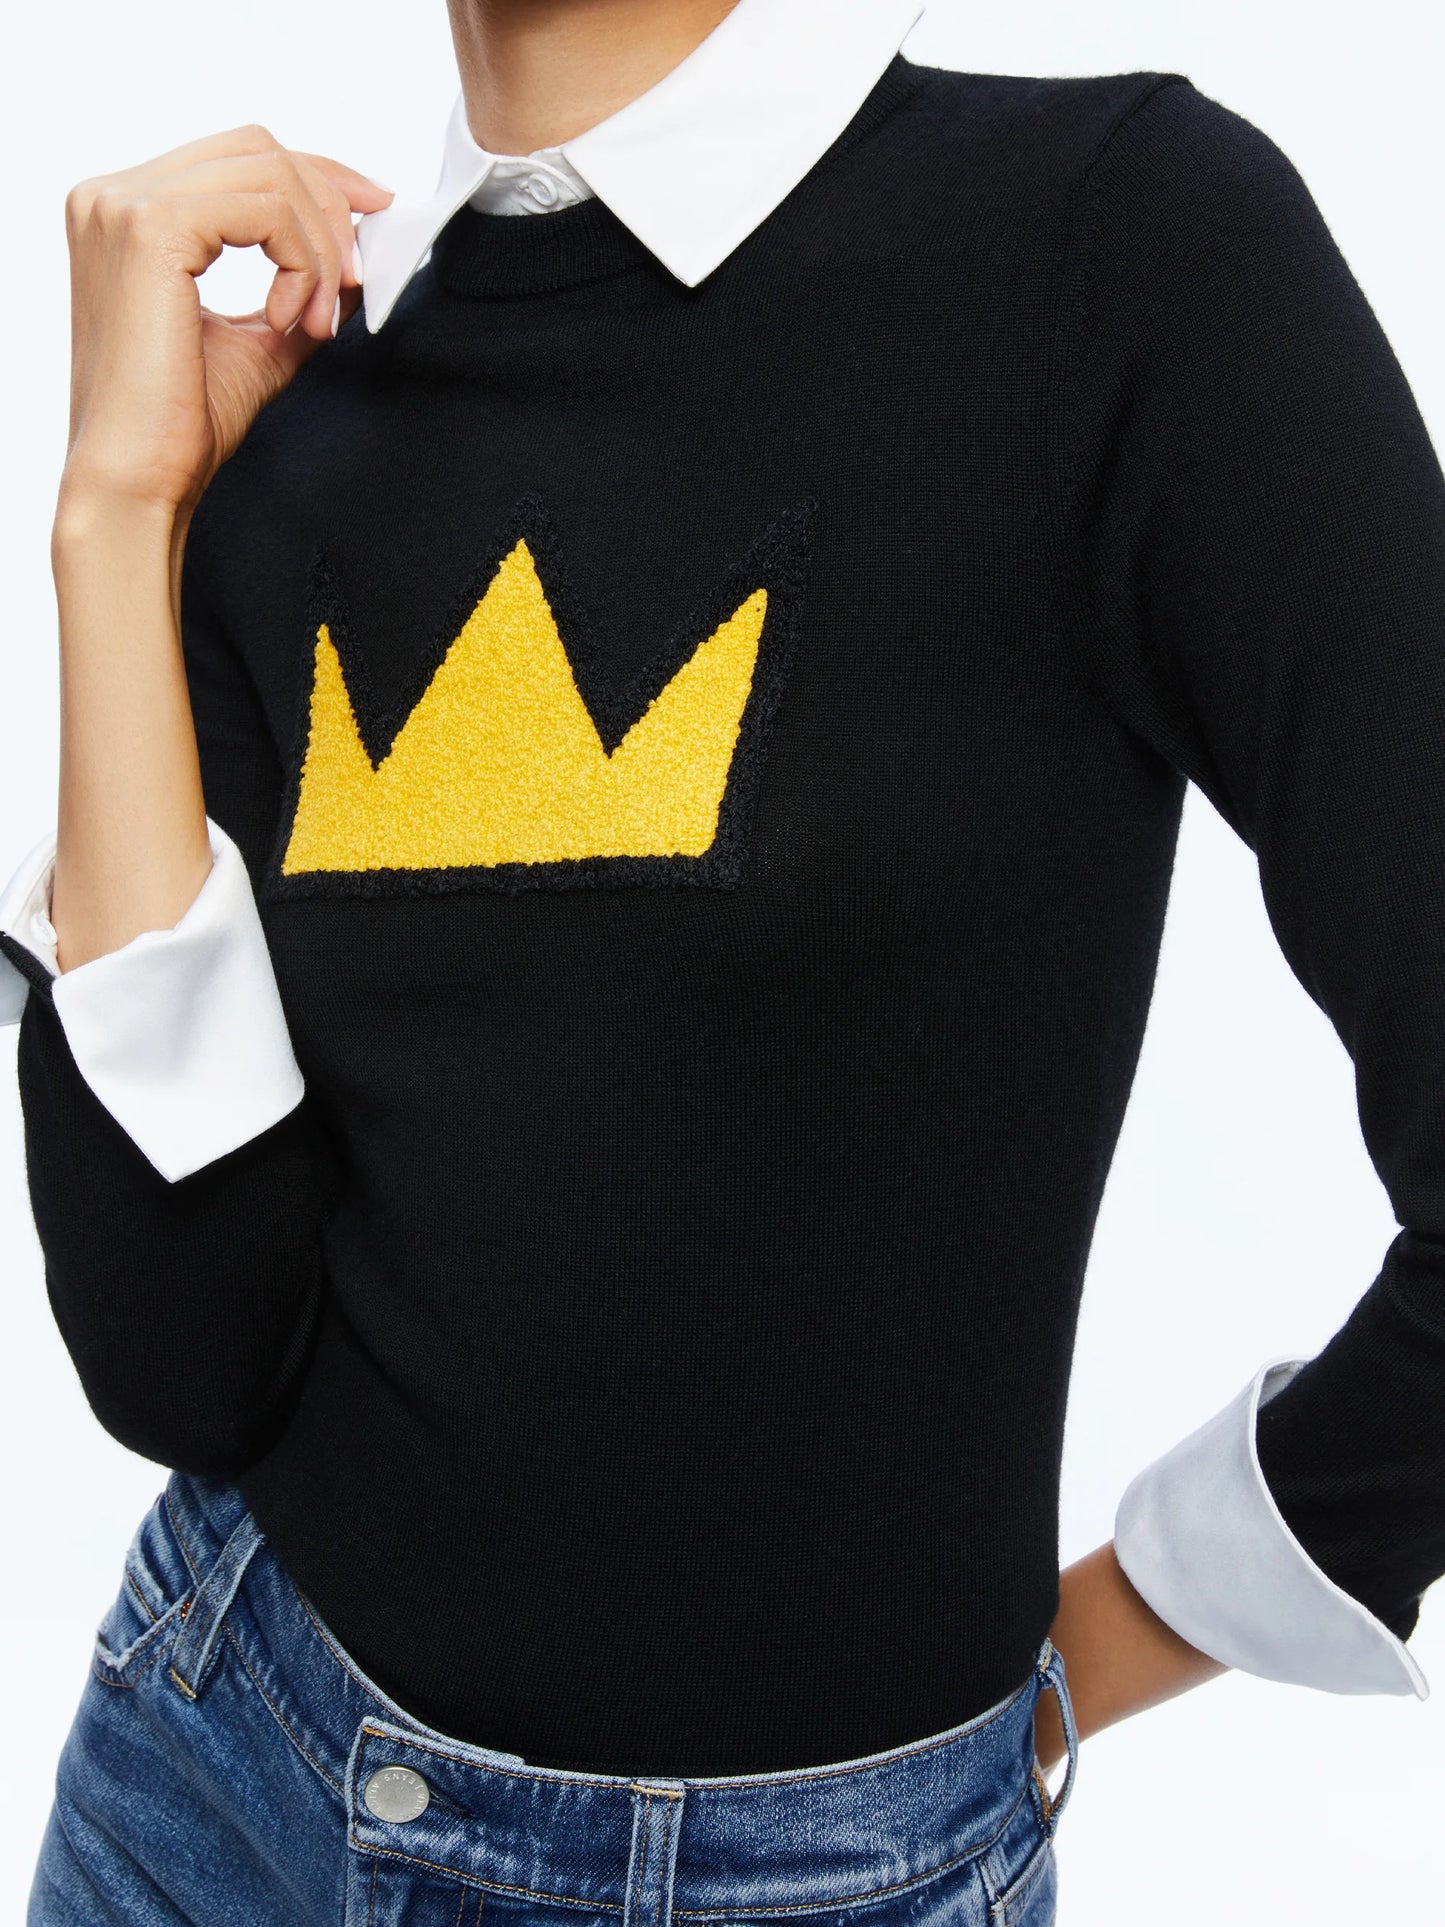 A+O Basquiat Porla Collared Sweater Black - Alice + Olivia